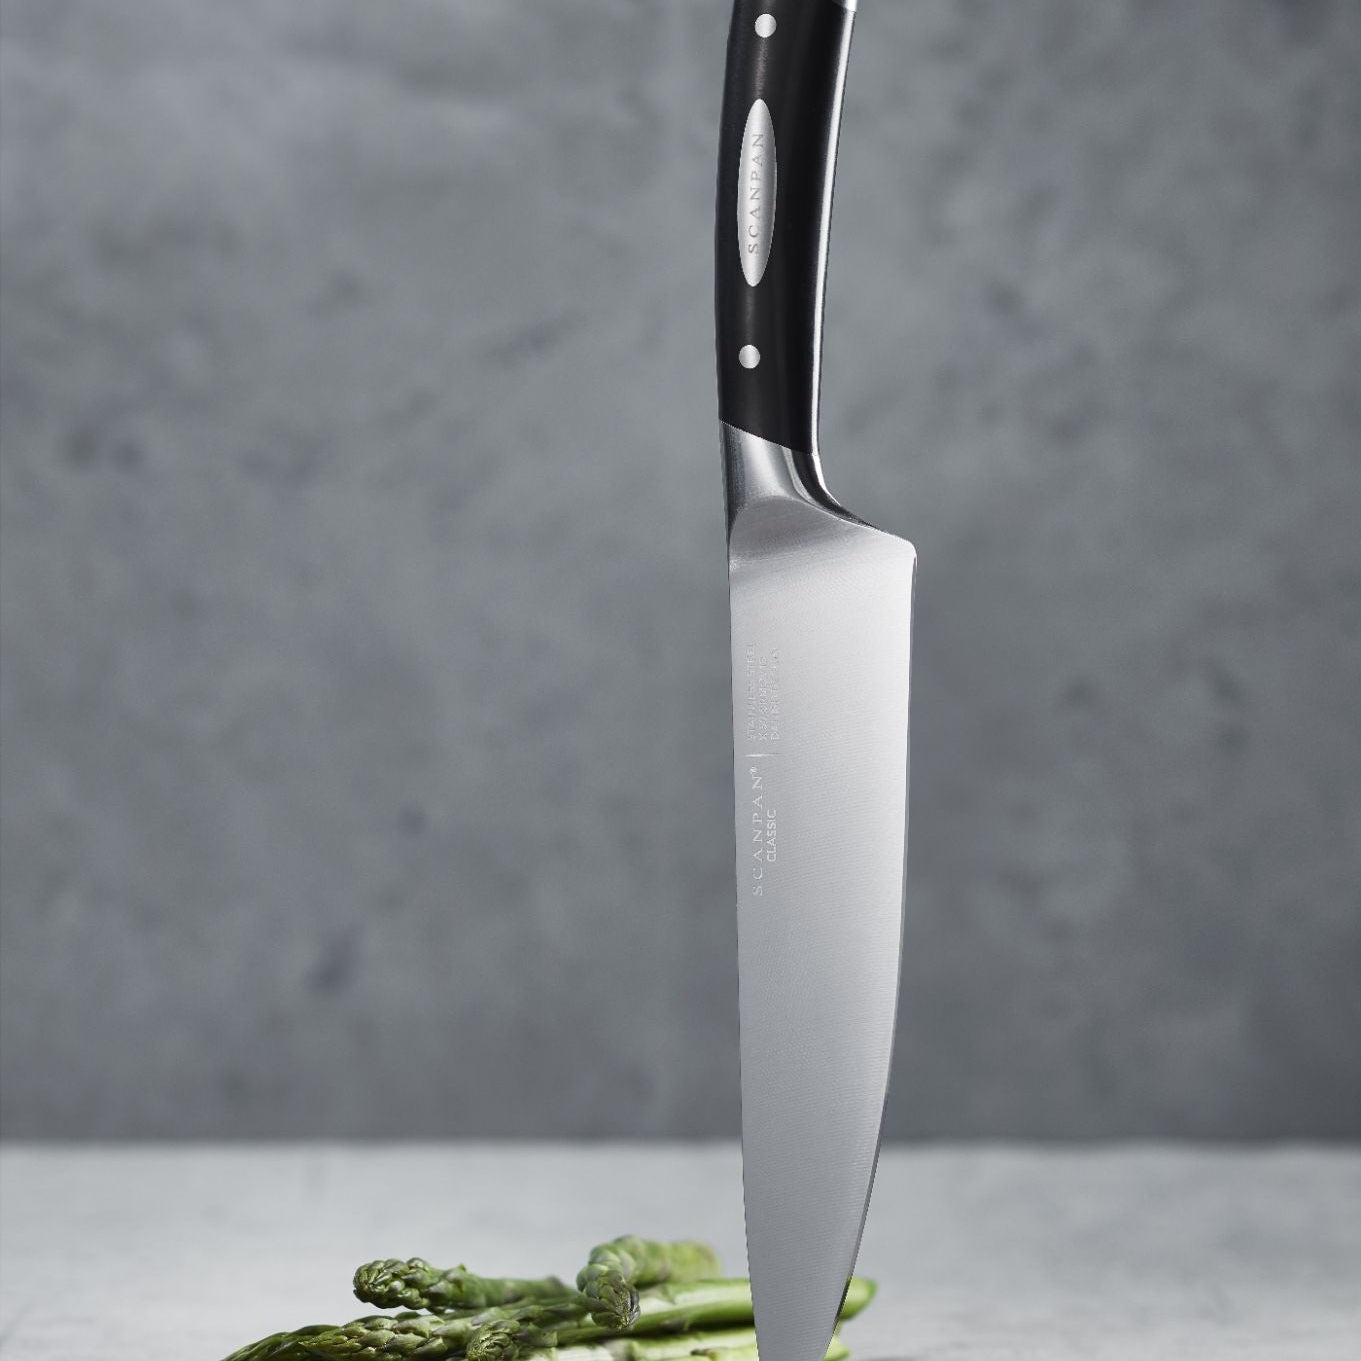 SCANPAN Classic Knives - Utility Knife 15cm